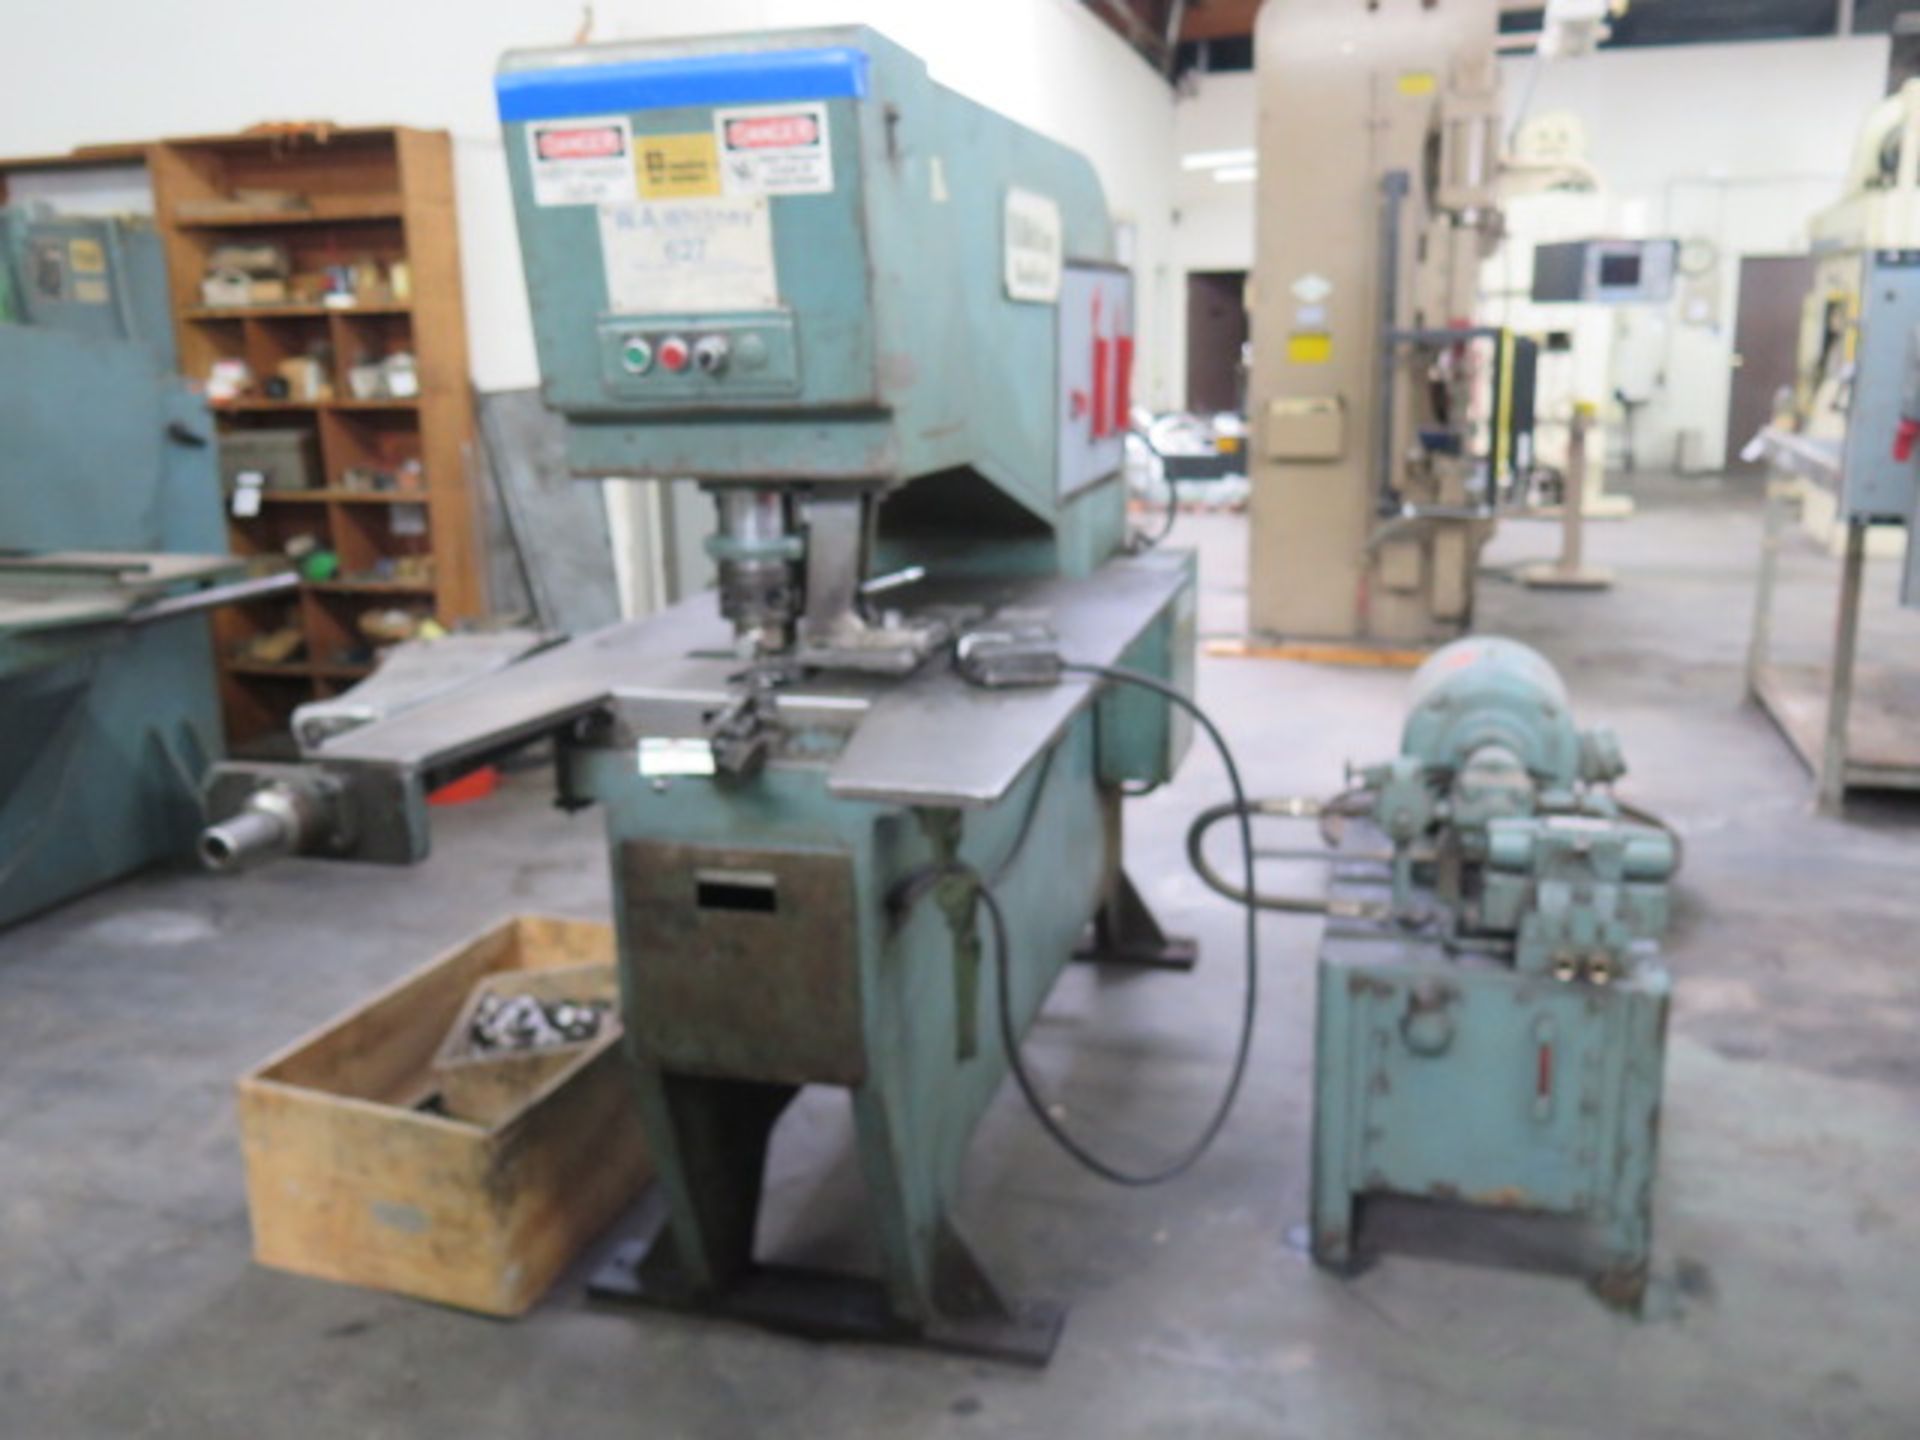 WA Whitney mdl. 627 Fabrication Punch Press s/n 627-000-15583 w/ 36” Throat